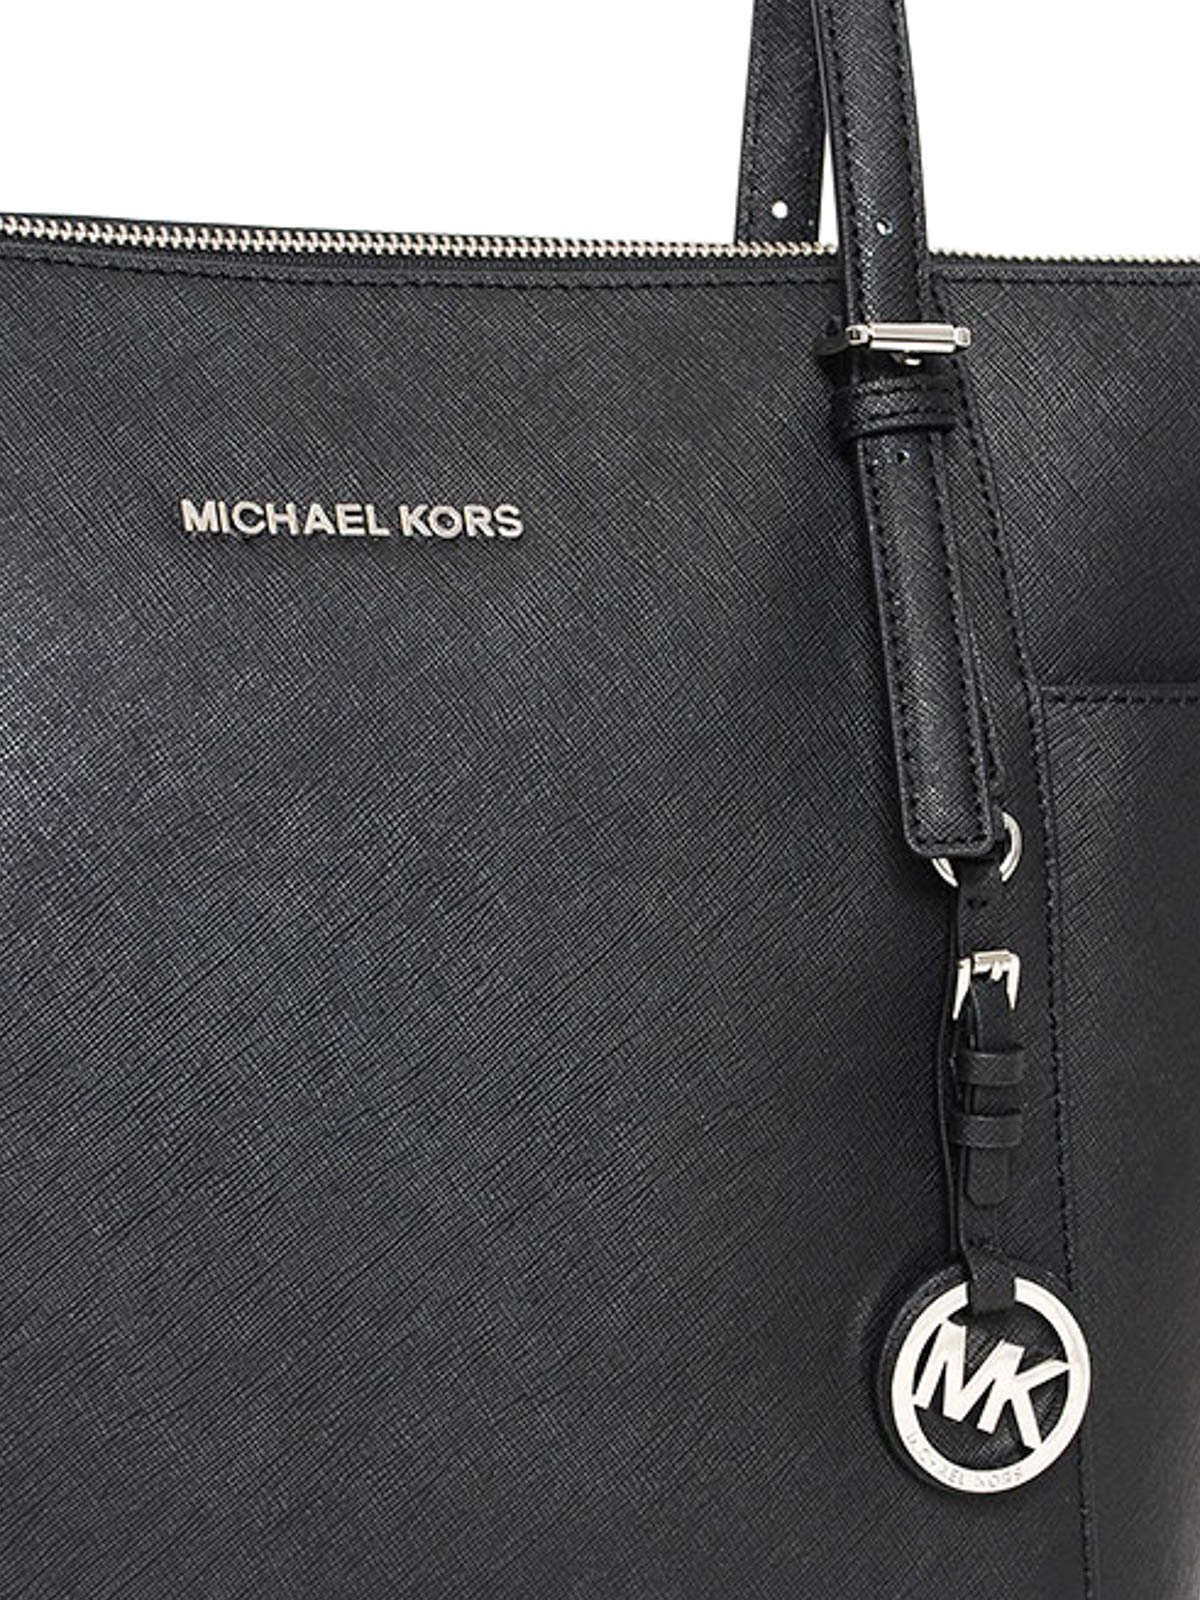 Totes bags Michael Kors - Jet Set large saffiano leather tote